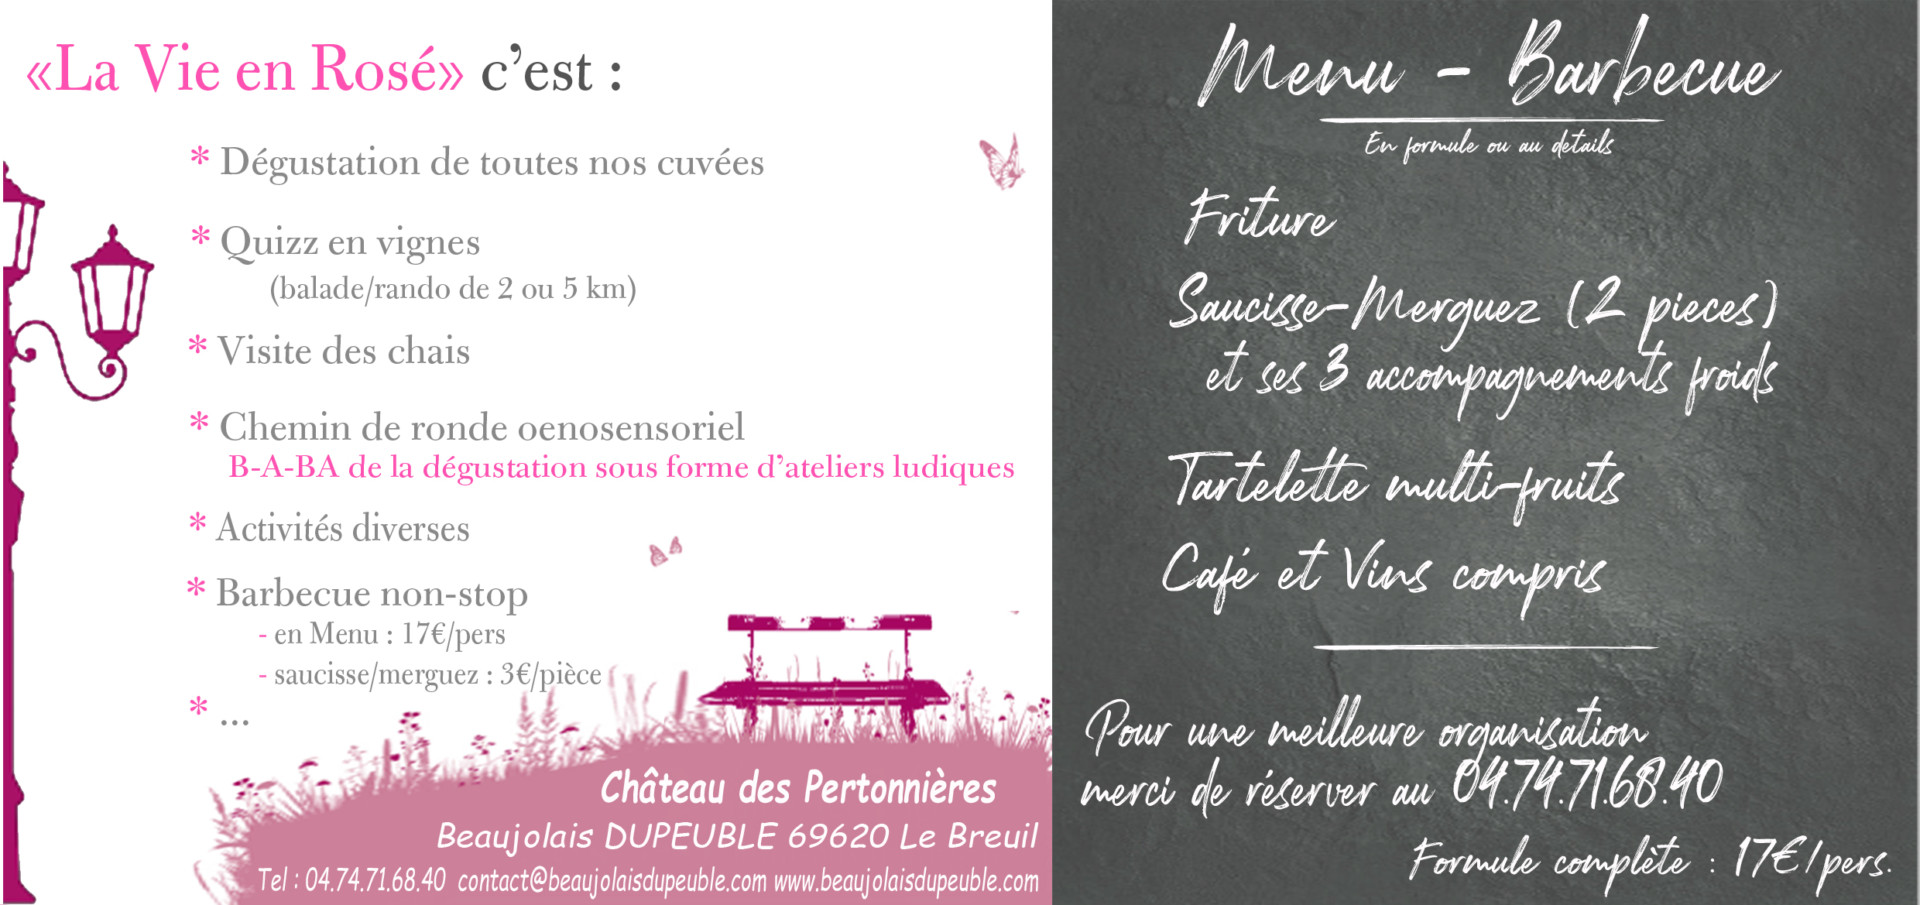 Invitation VERSO Barbecue Chateau Pertonnieres Beaujolais Dupeuble